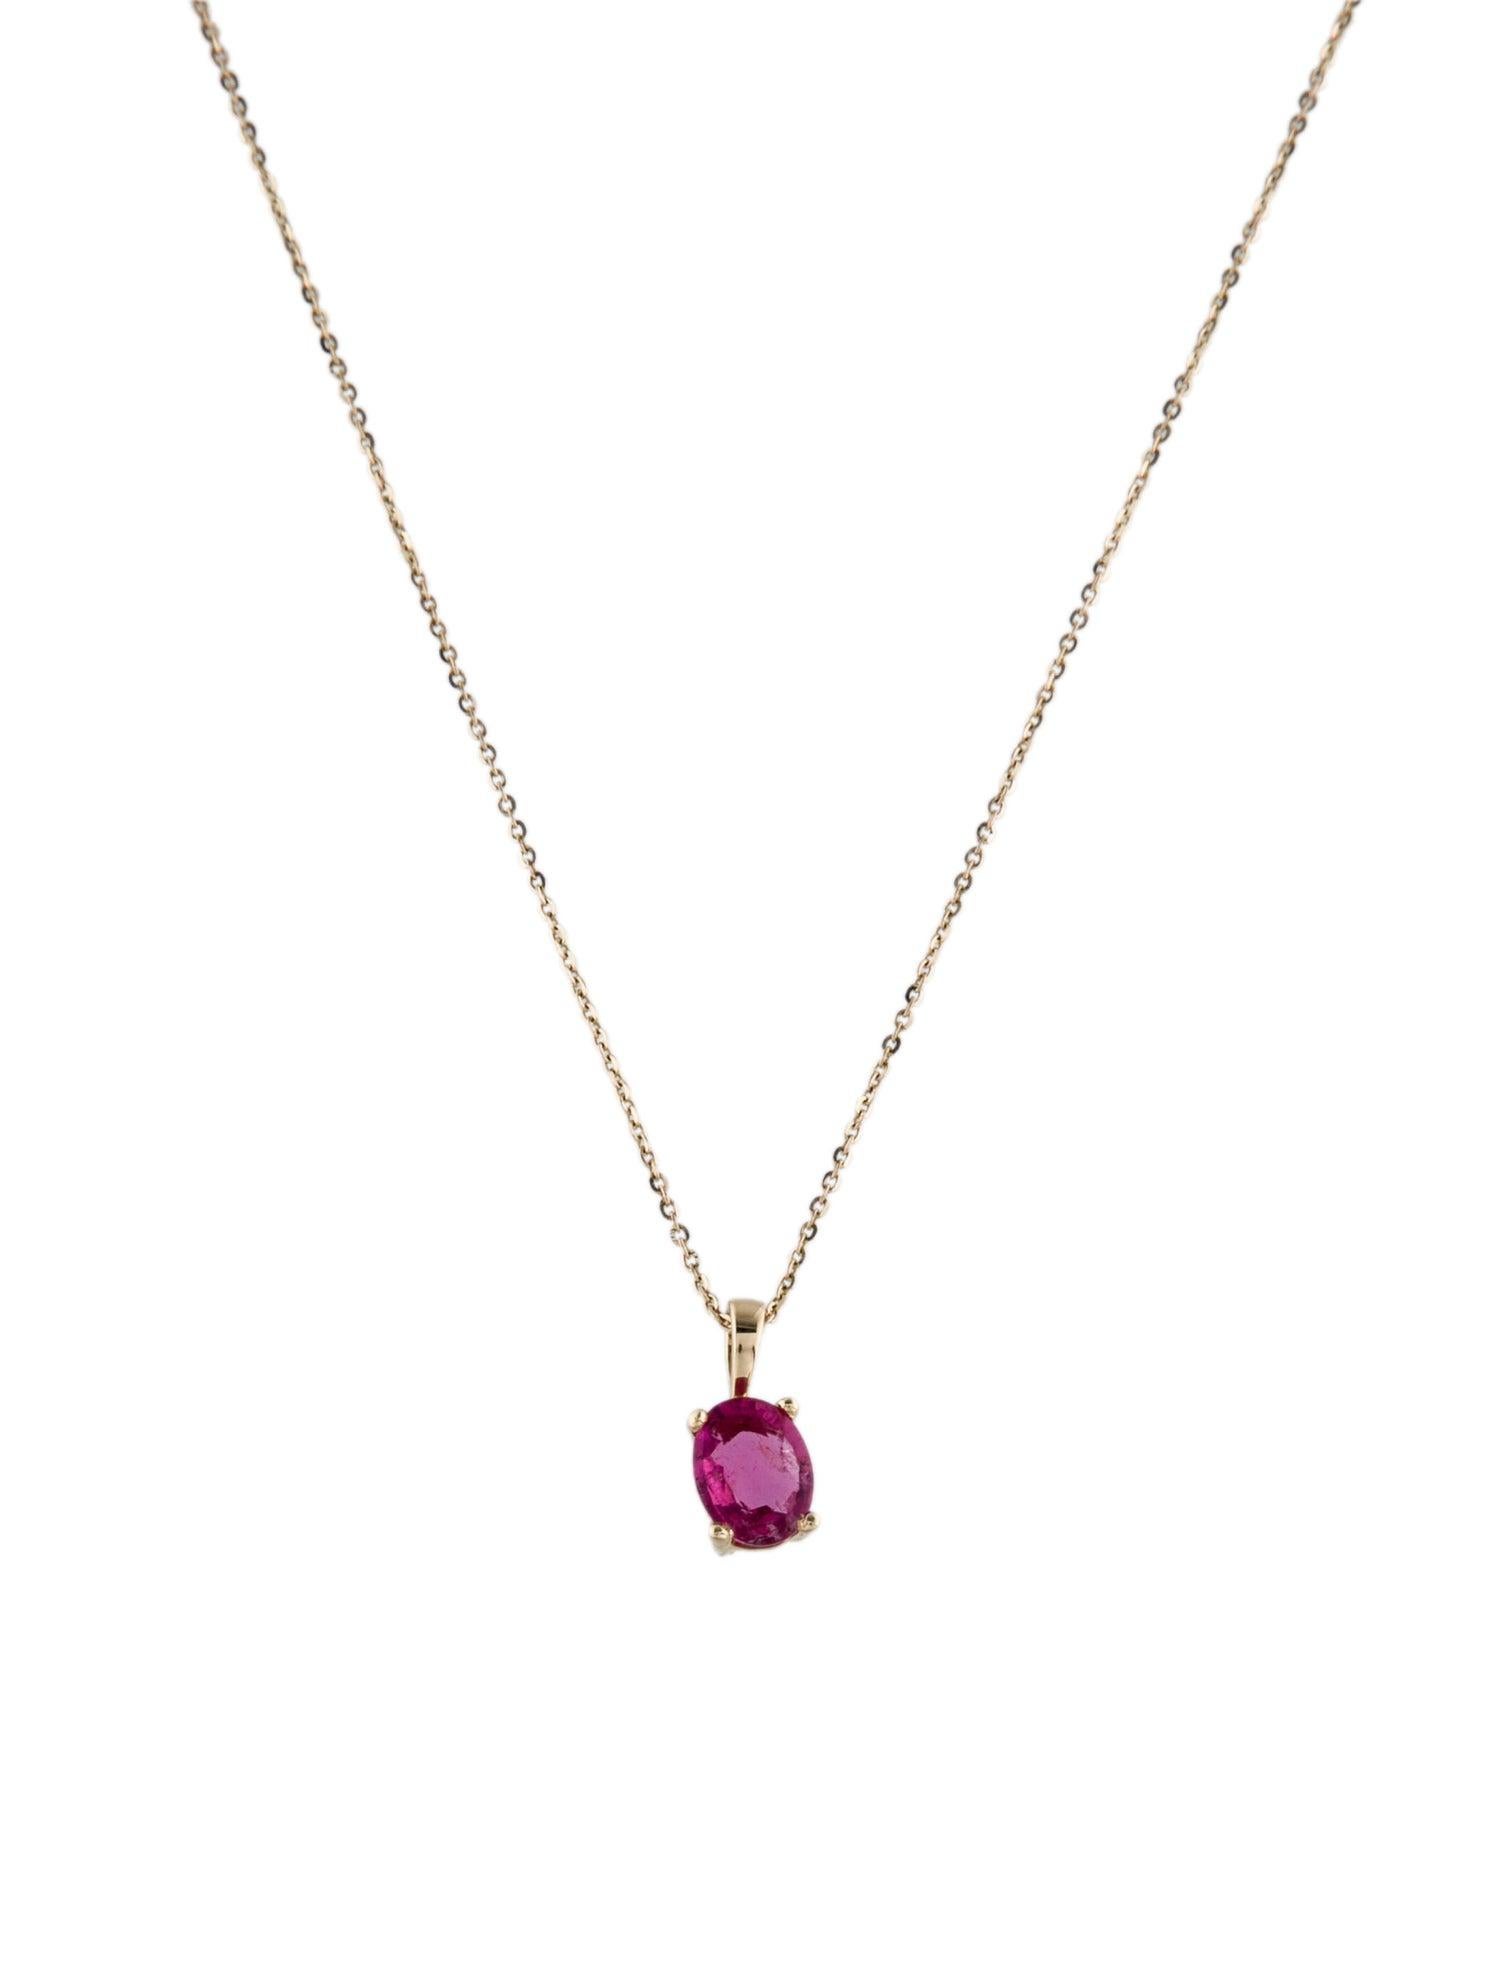 Women's or Men's 14K 0.78ctw Tourmaline Pendant Necklace - Elegant Gemstone Statement Jewelry For Sale